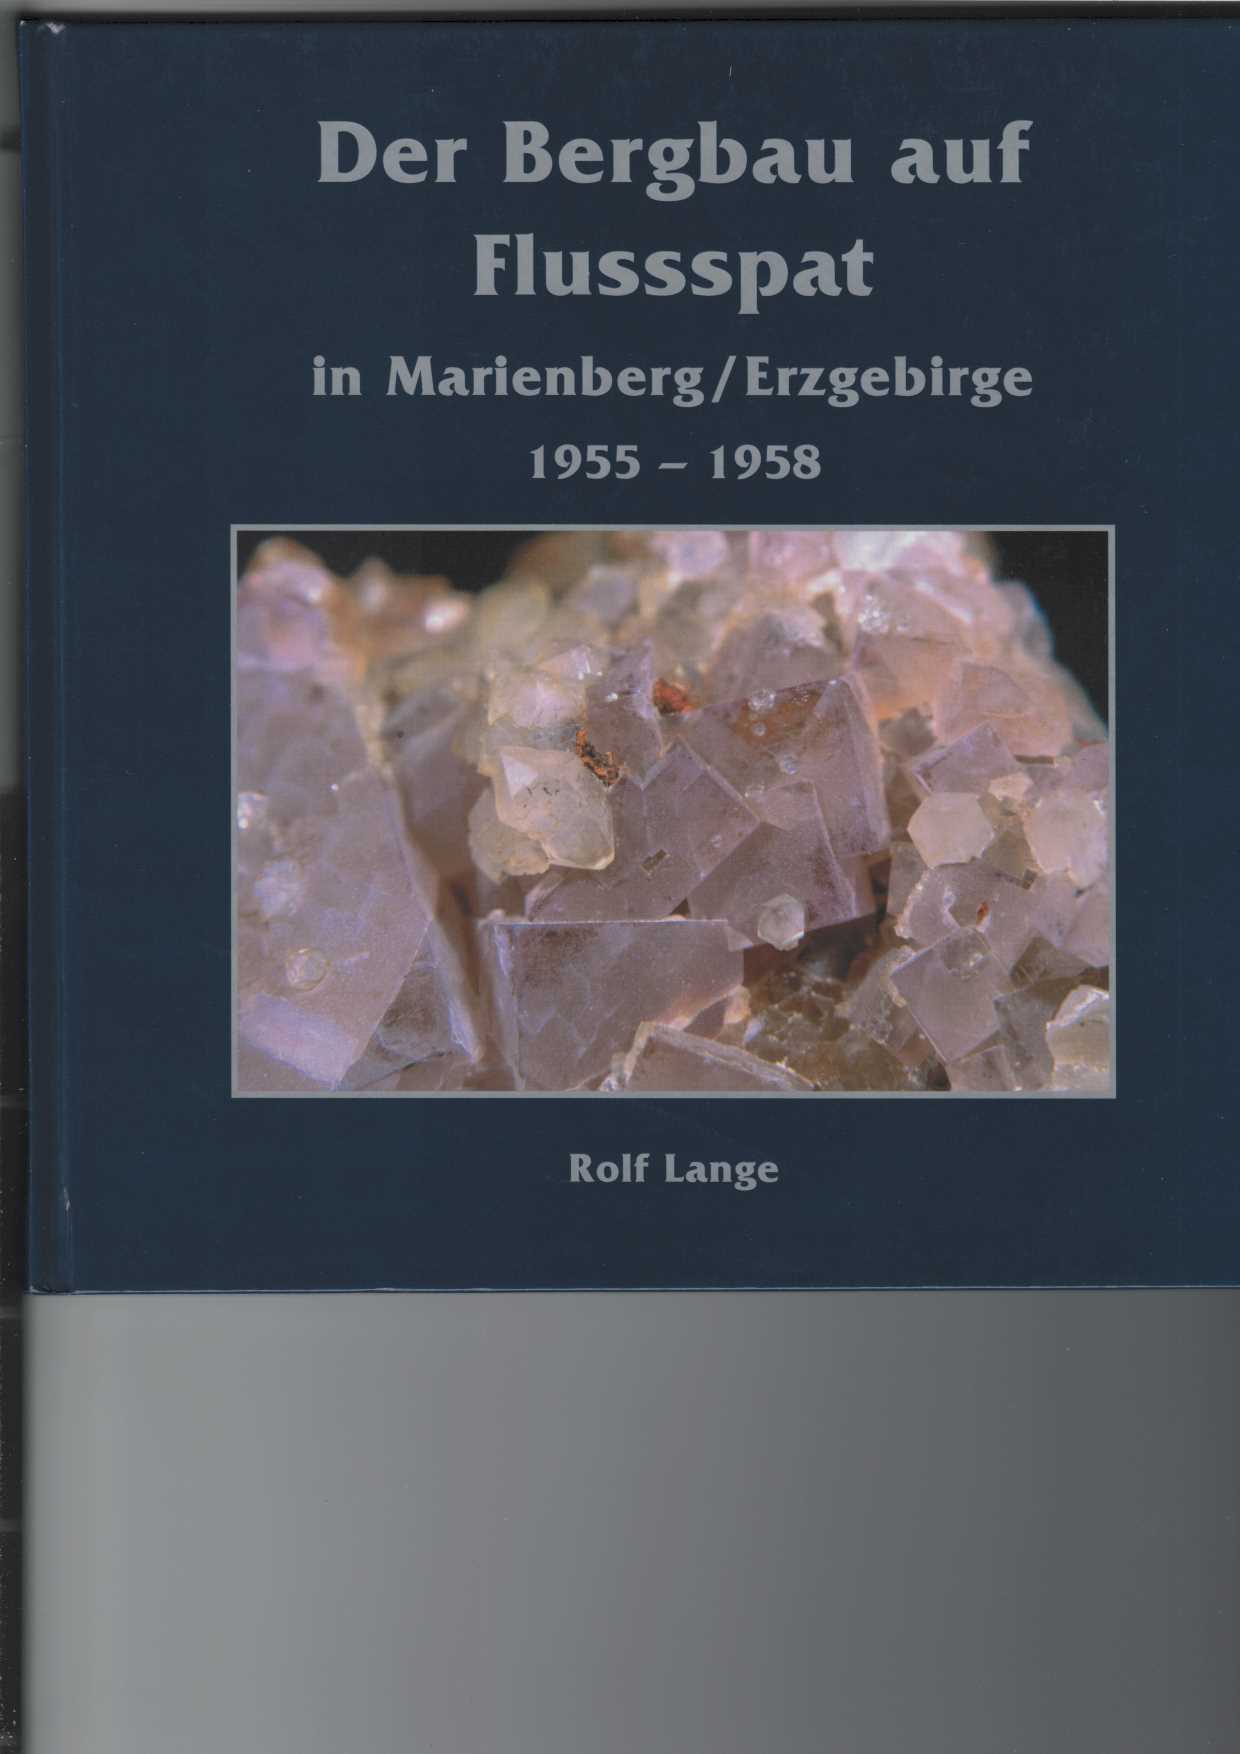 Der Bergbau auf Flussspat in Marienberg/Erzgebirge 1955 - 1958